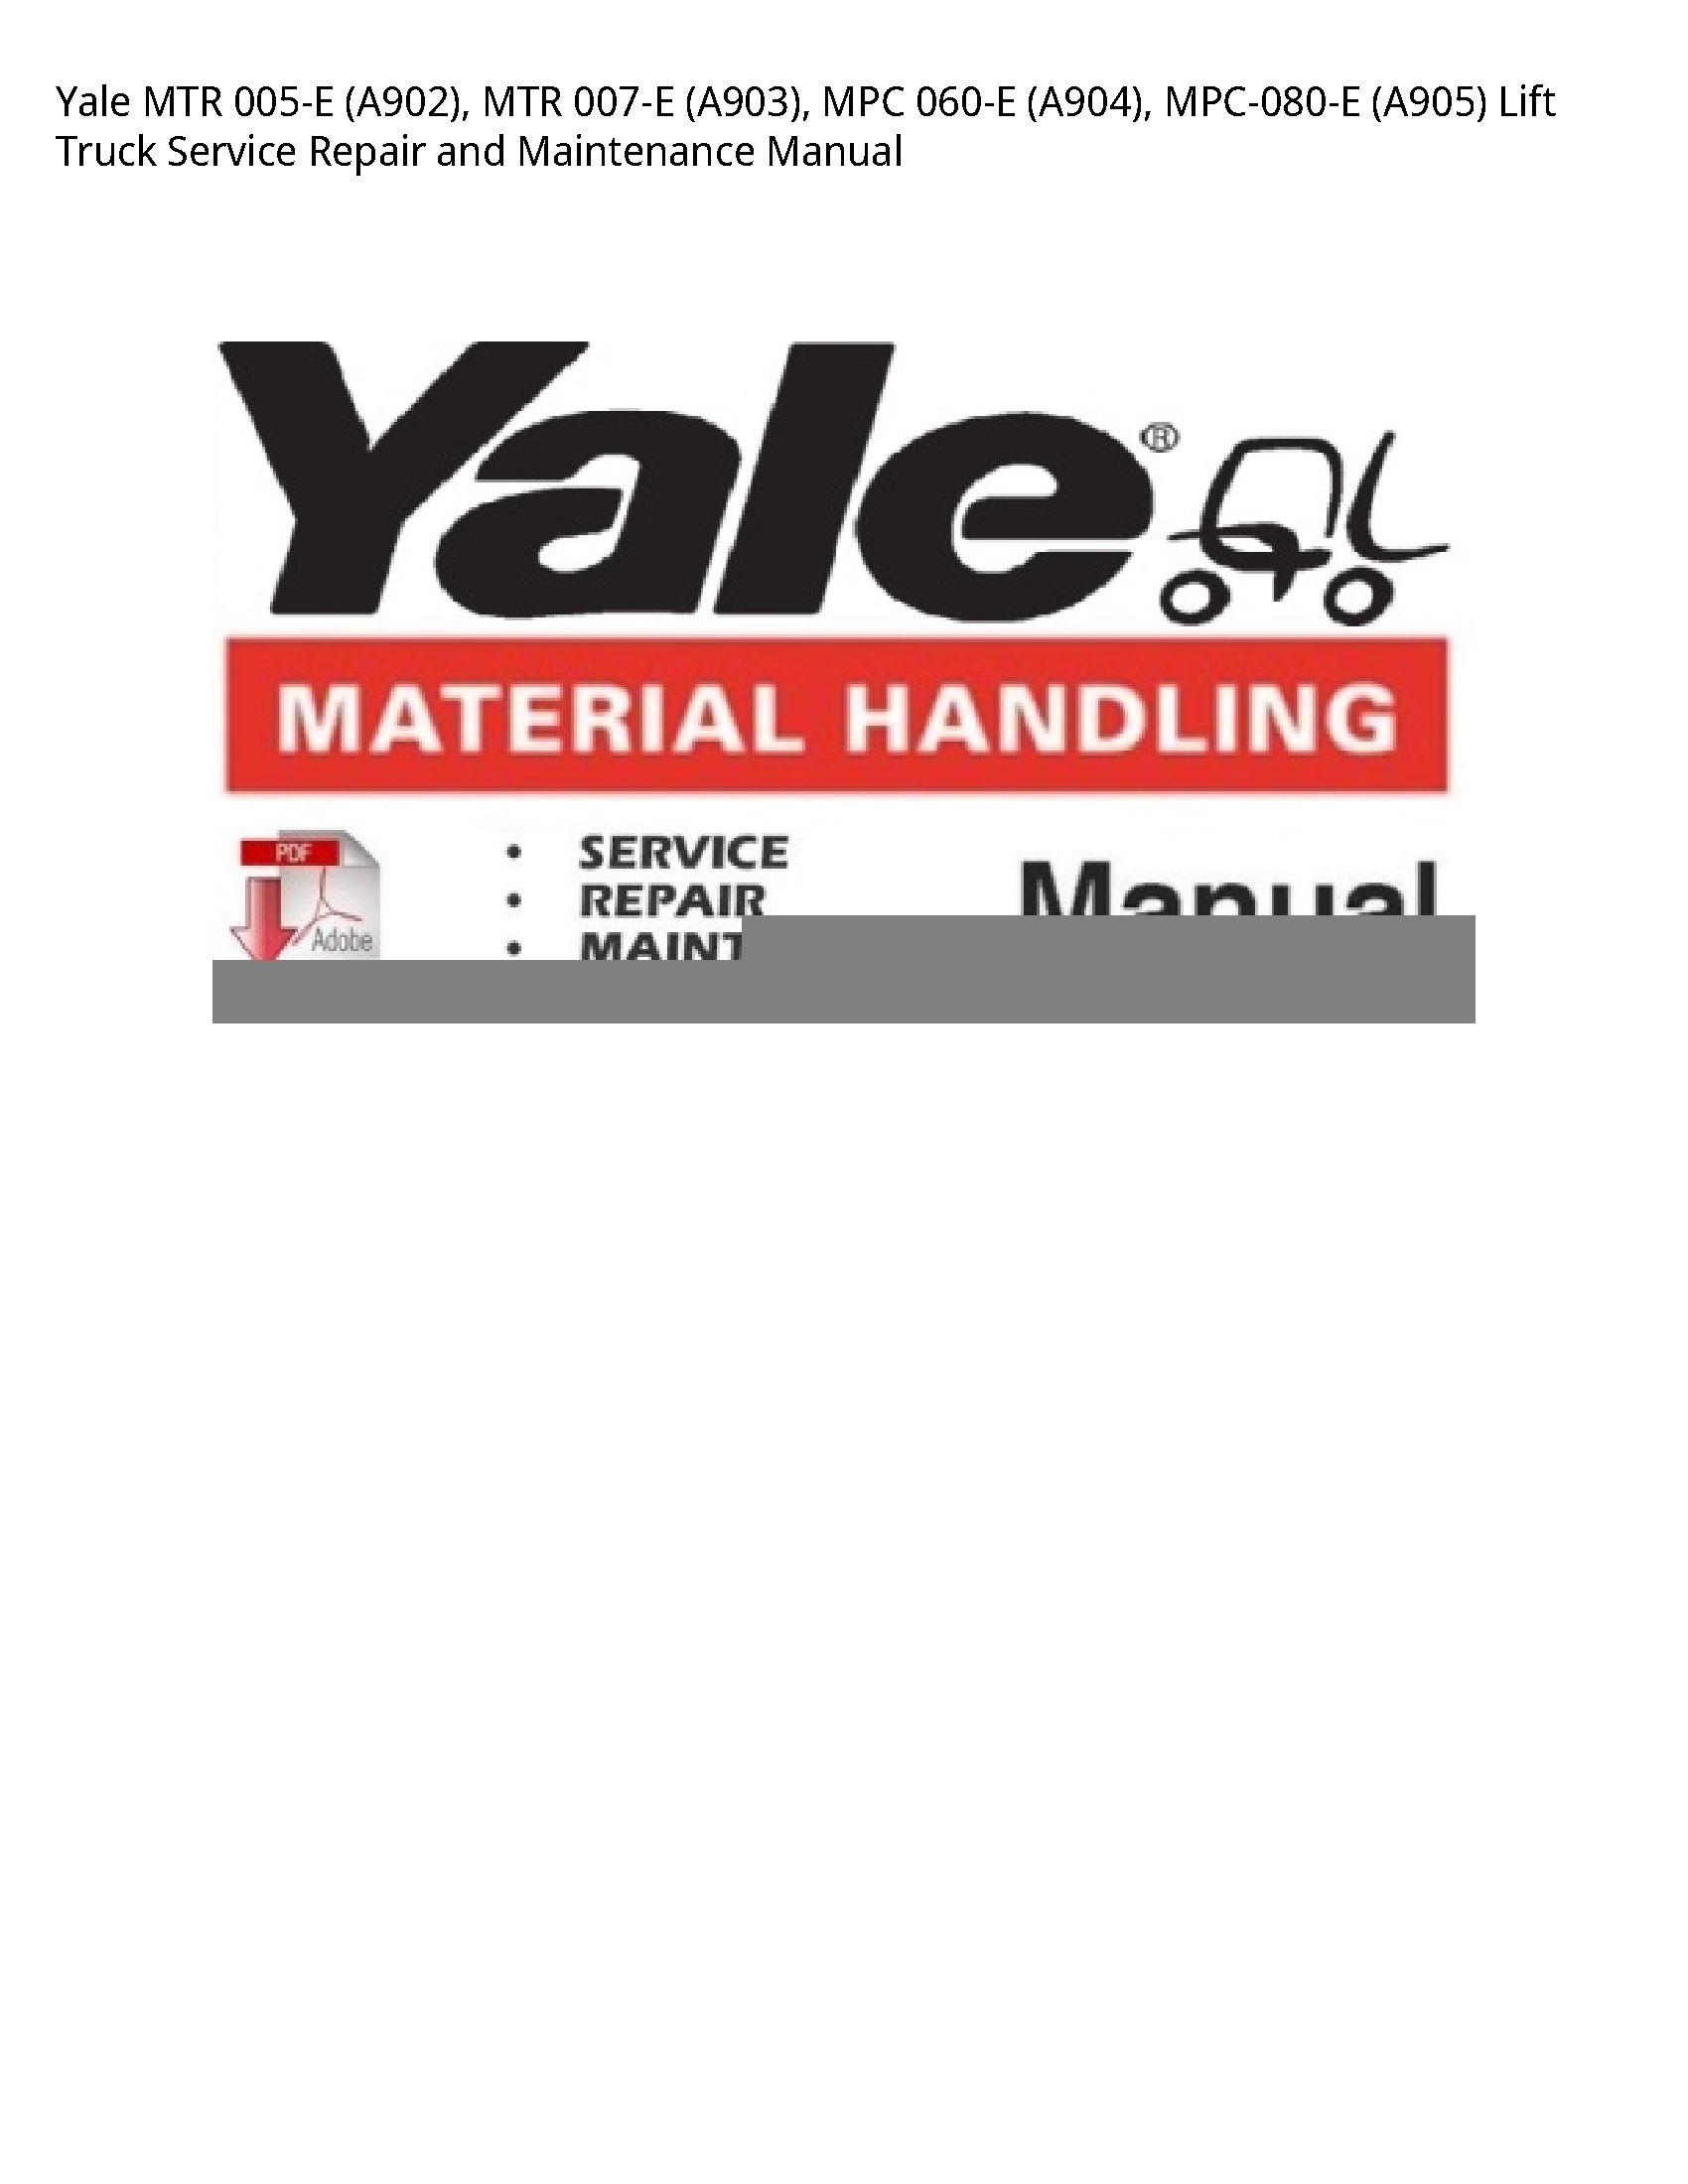 Yale 005-E MTR MTR MPC Lift Truck manual